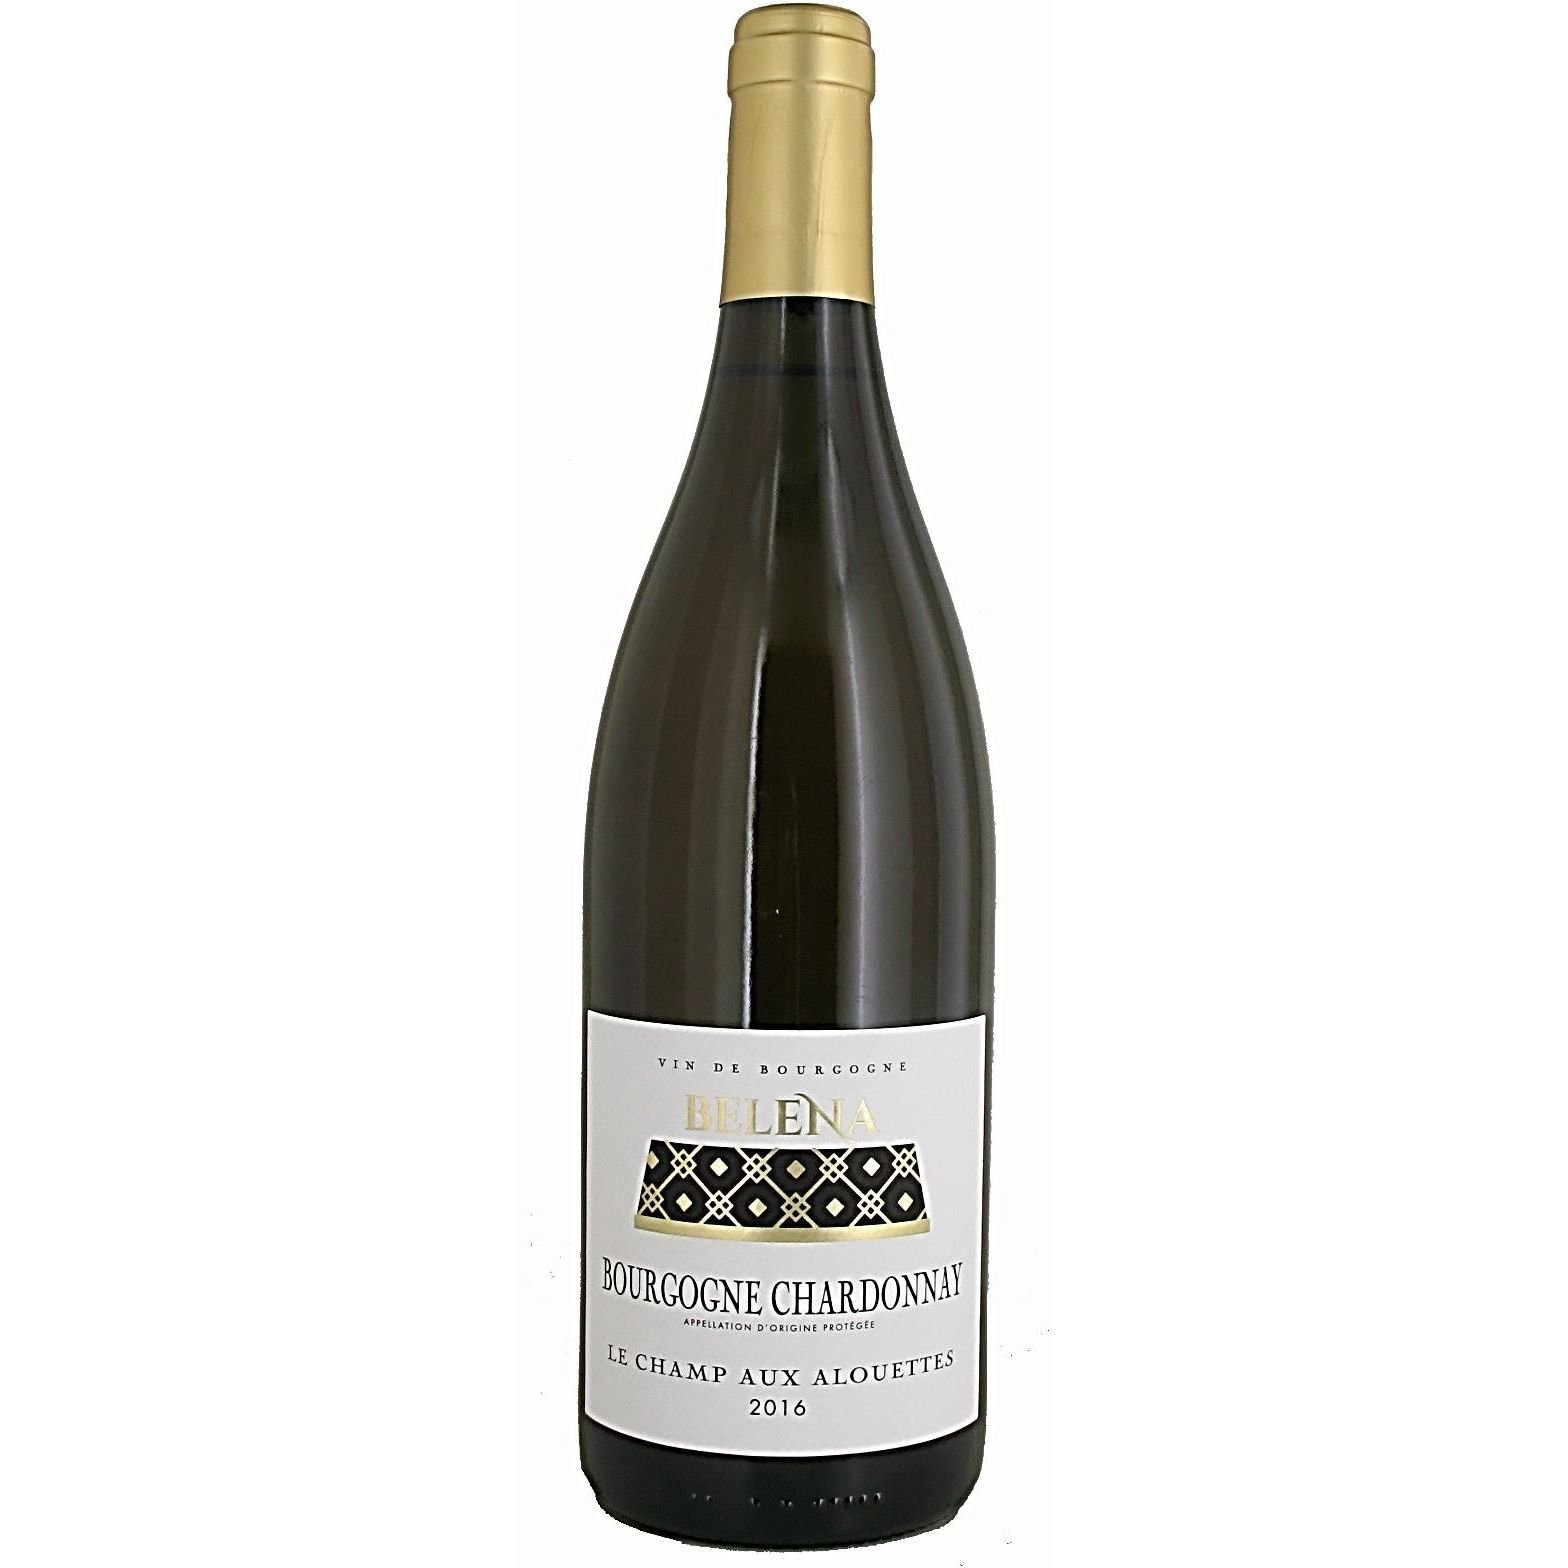 Вино Belena Aujoux Bourgogne Chardonnay 2016, белое, сухое, 0,75 л - фото 1